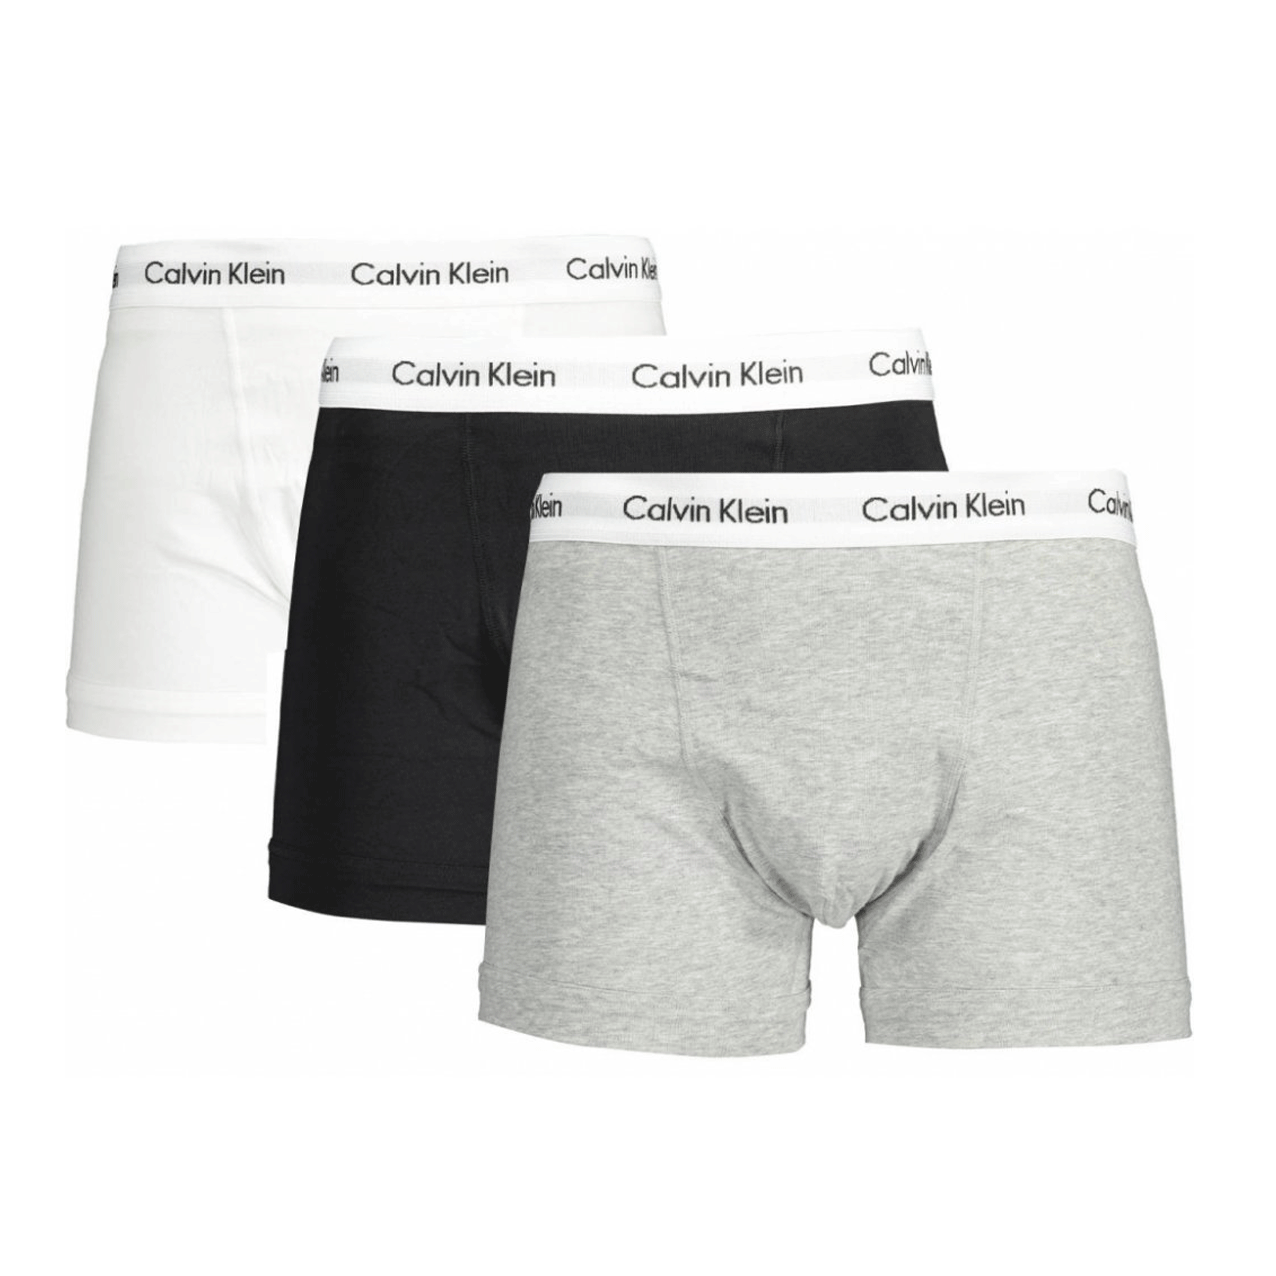 Calvin Klein Pack of 3 Boxers - White/Grey/Black - Small